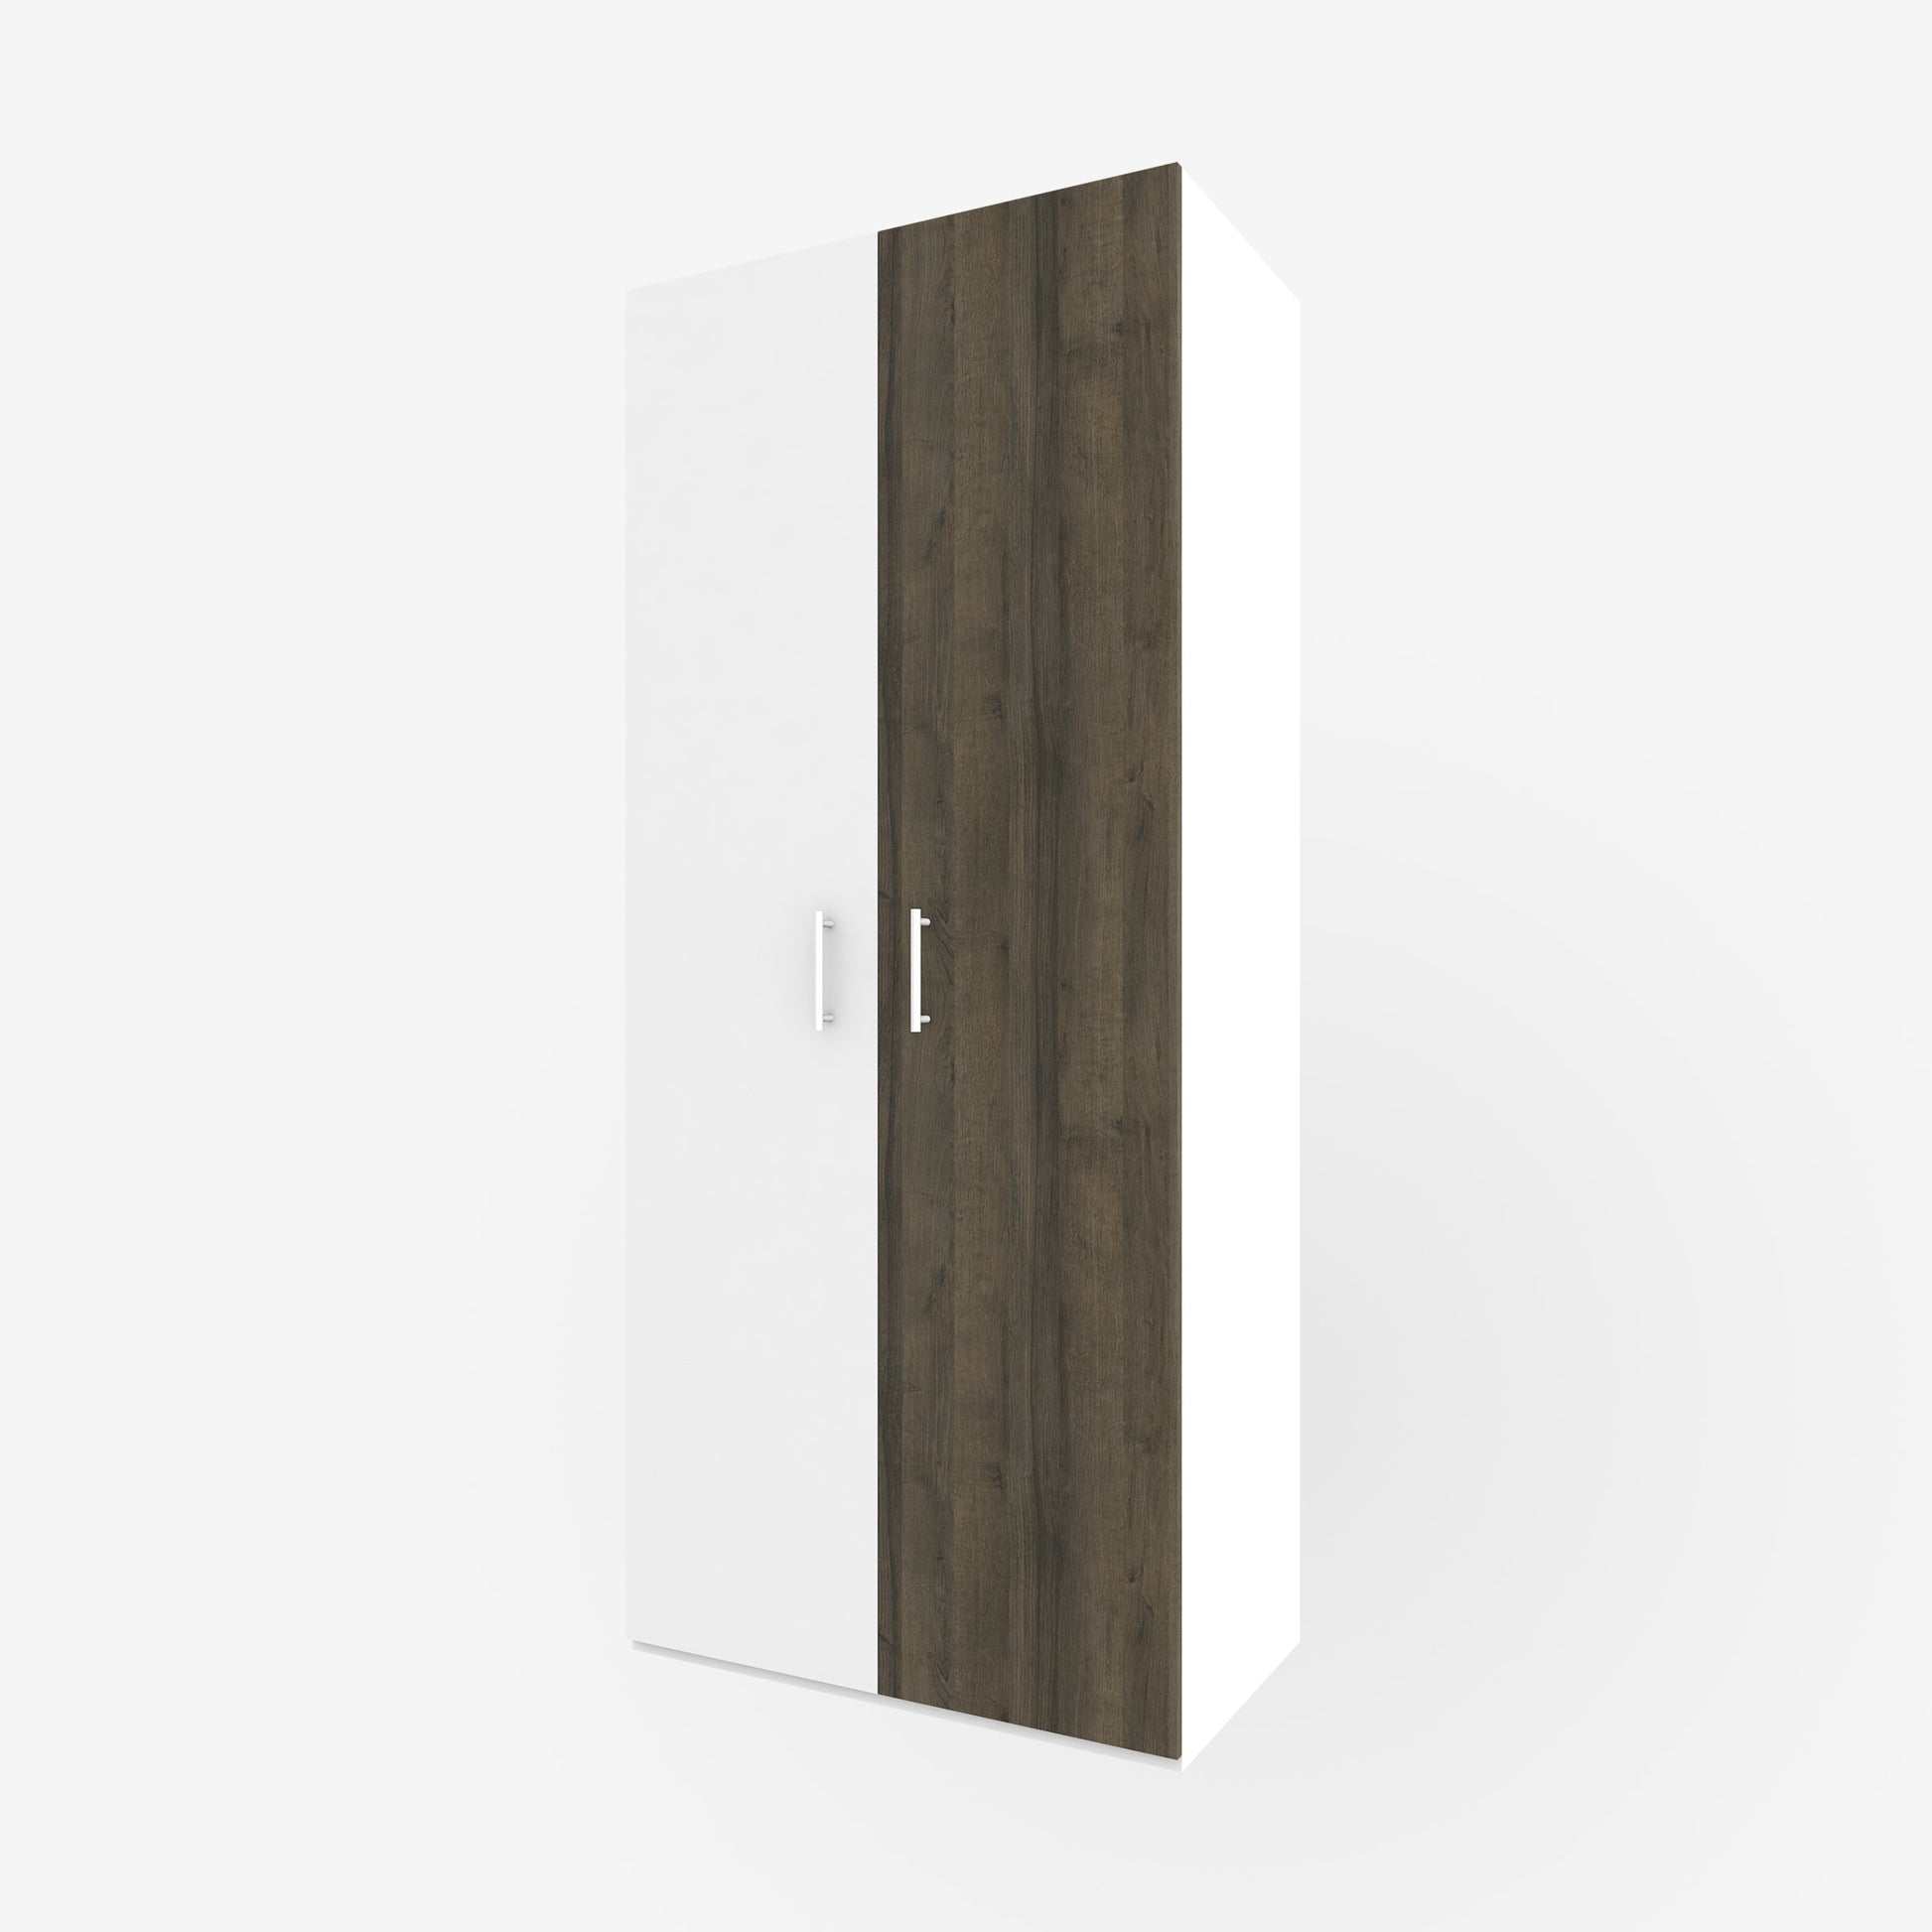 19.5" x 93" dark wood tone rockwood slab door for Ikea or Swedeboxx pax closet cabinet